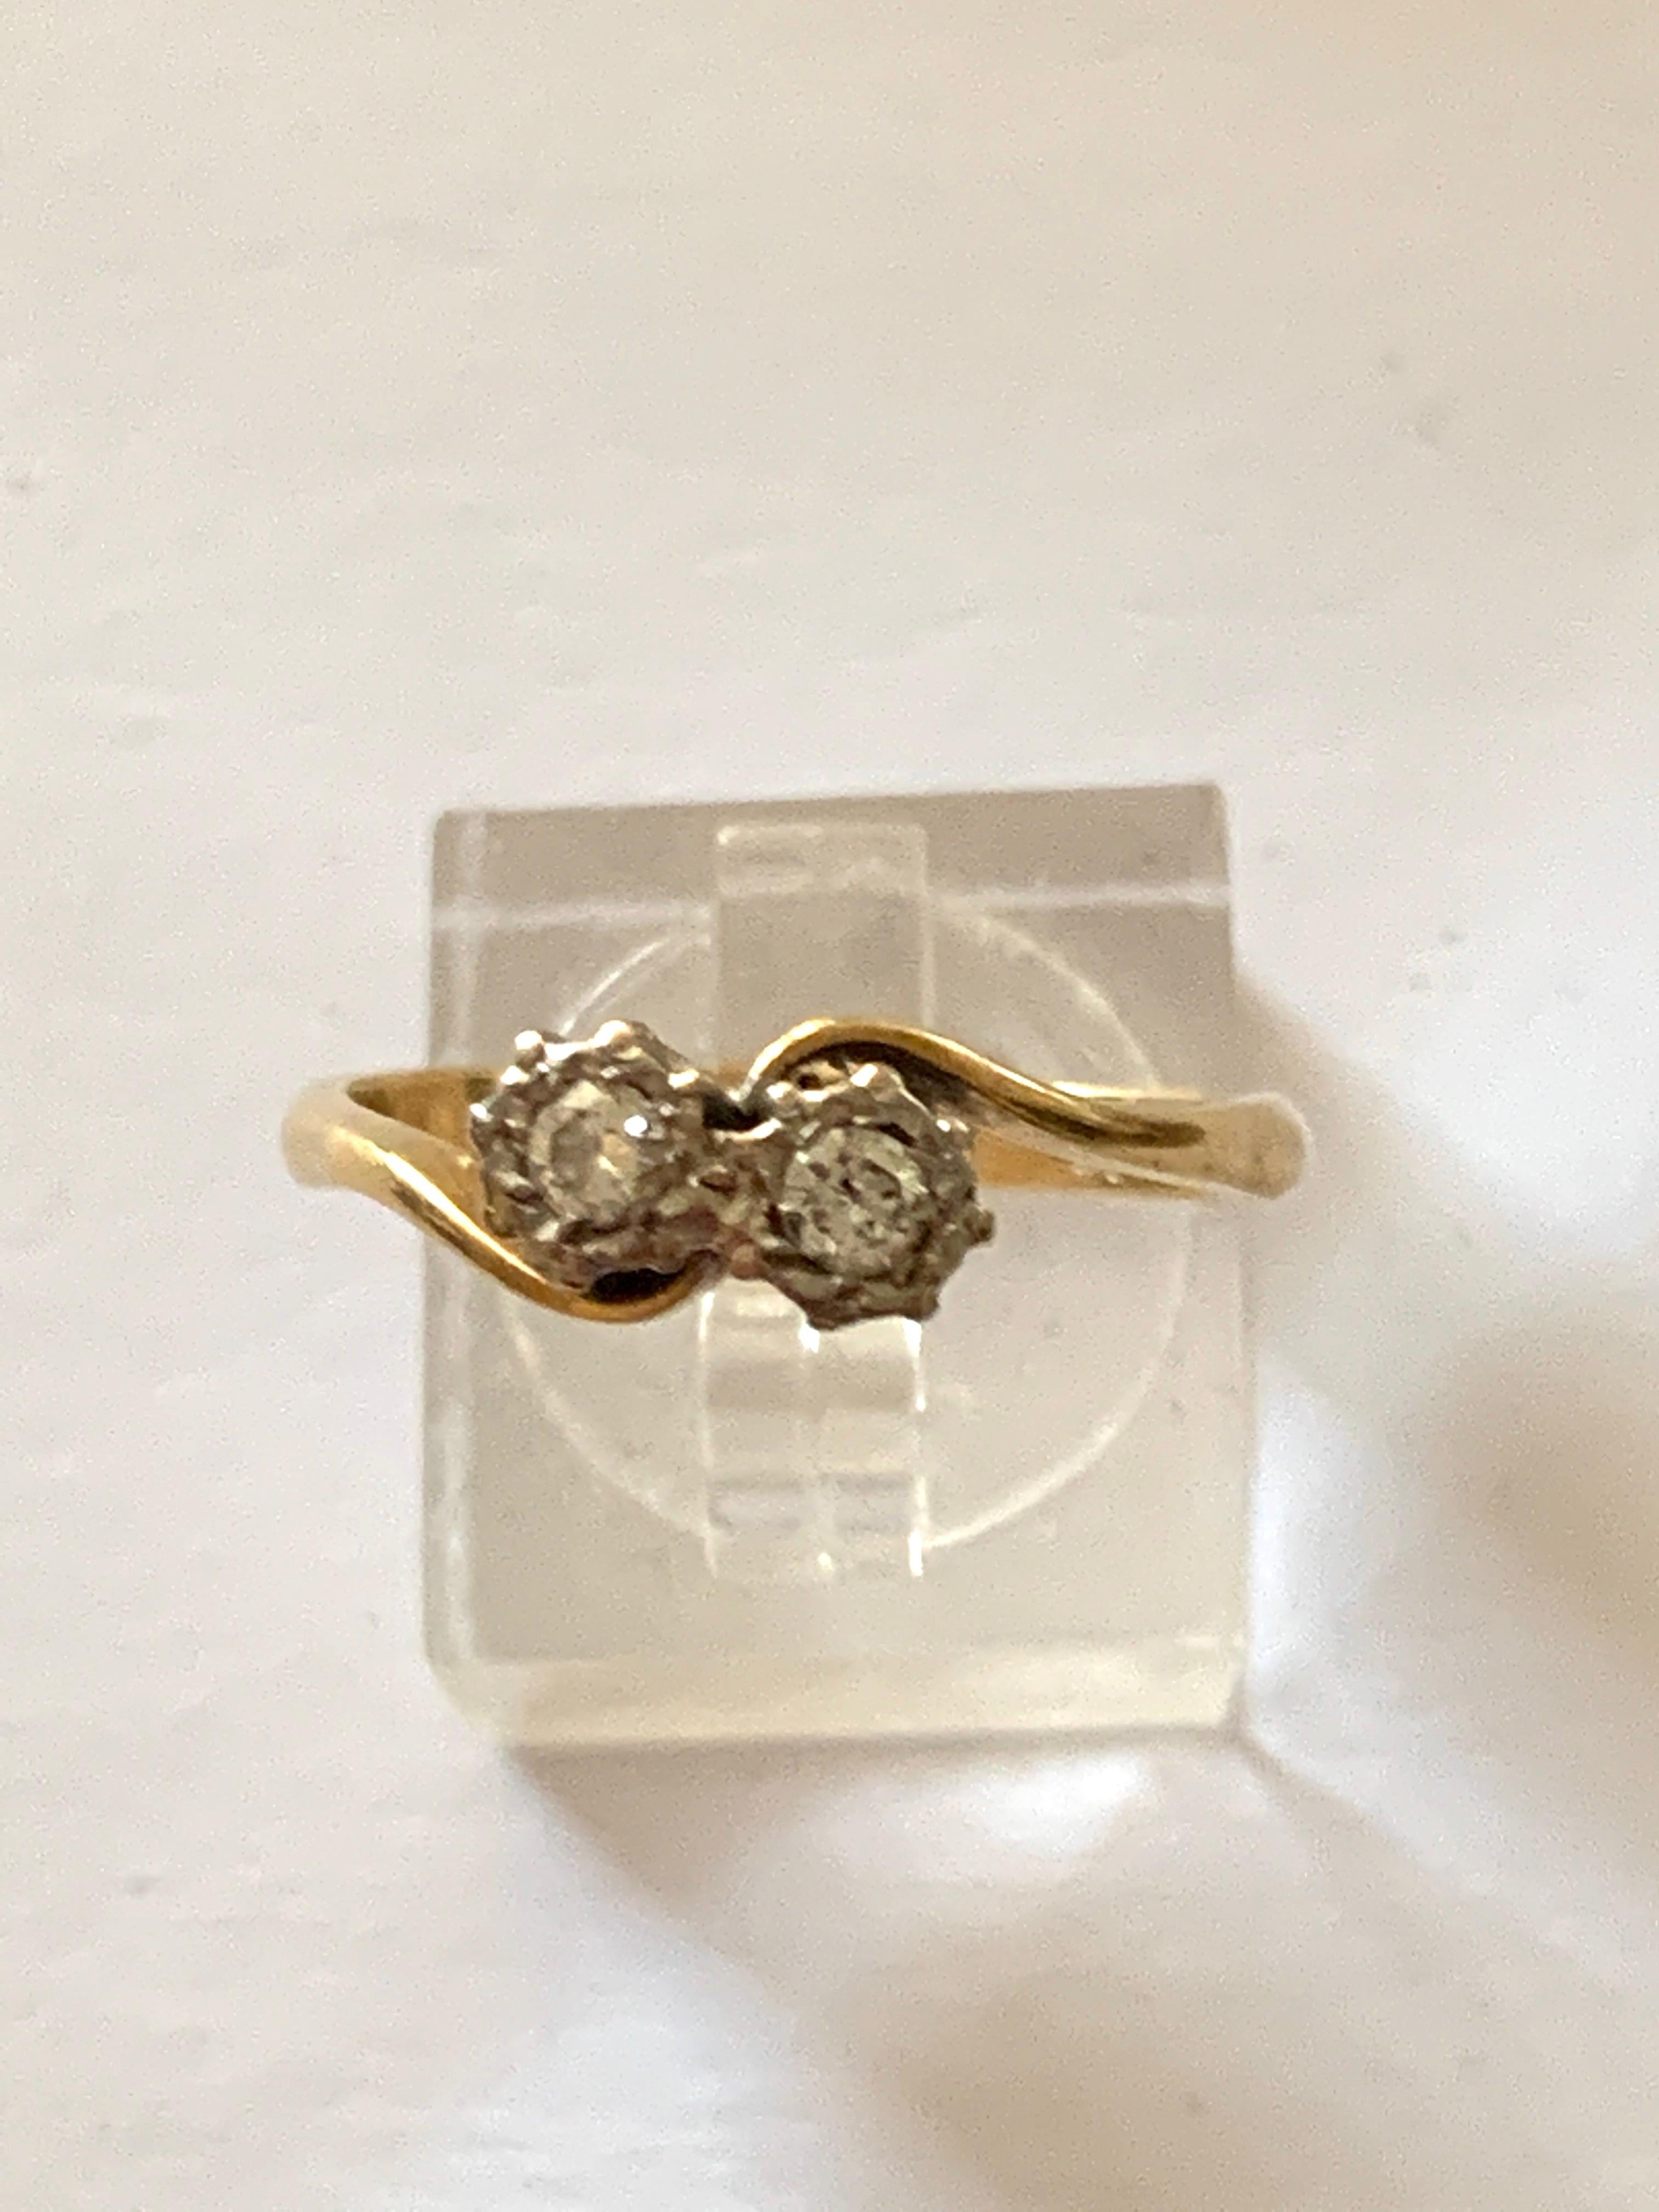 18ct 750 Gold 0.20 Carat Diamond Ring 
Full British Hallmarks 
Makers 